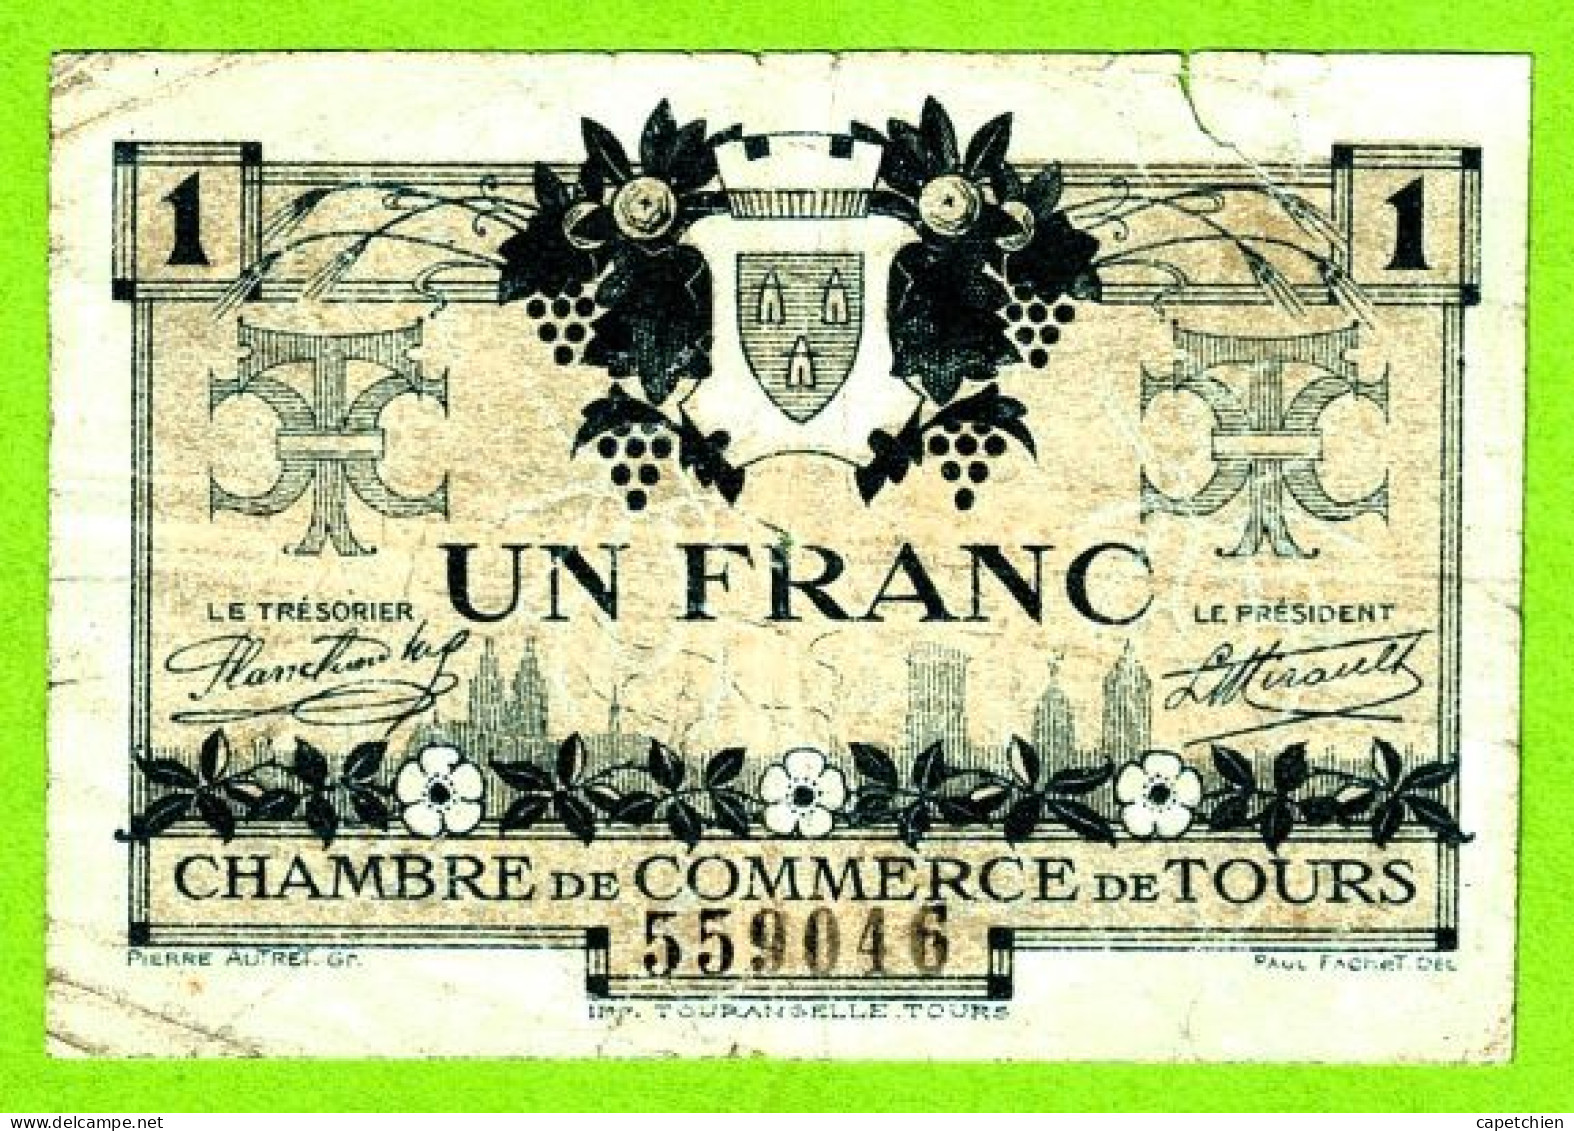 FRANCE / CHAMBRE De COMMERCE De TOURS / 1 FRANC / 9 MAI 1920 / 559046 / SERIE 2eme - Handelskammer